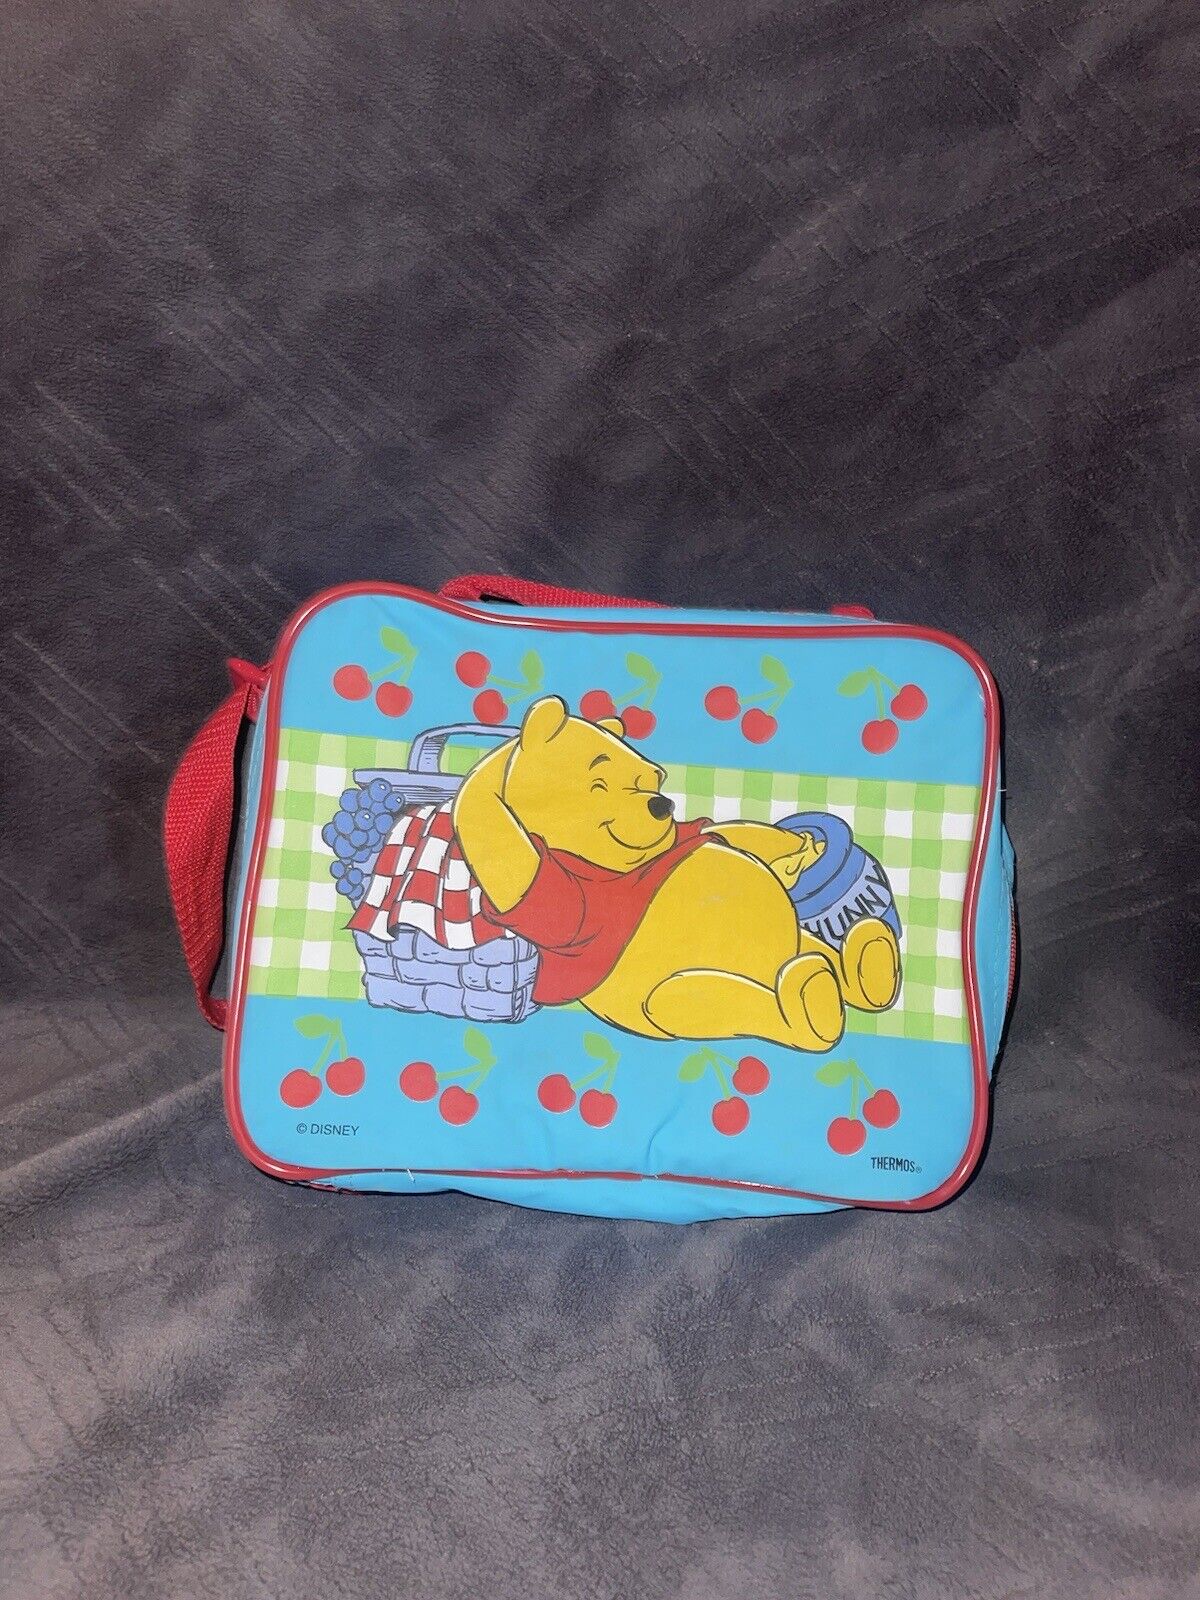 Vintage Disney Winnie The Pooh Thermos Brand Lunch Bag